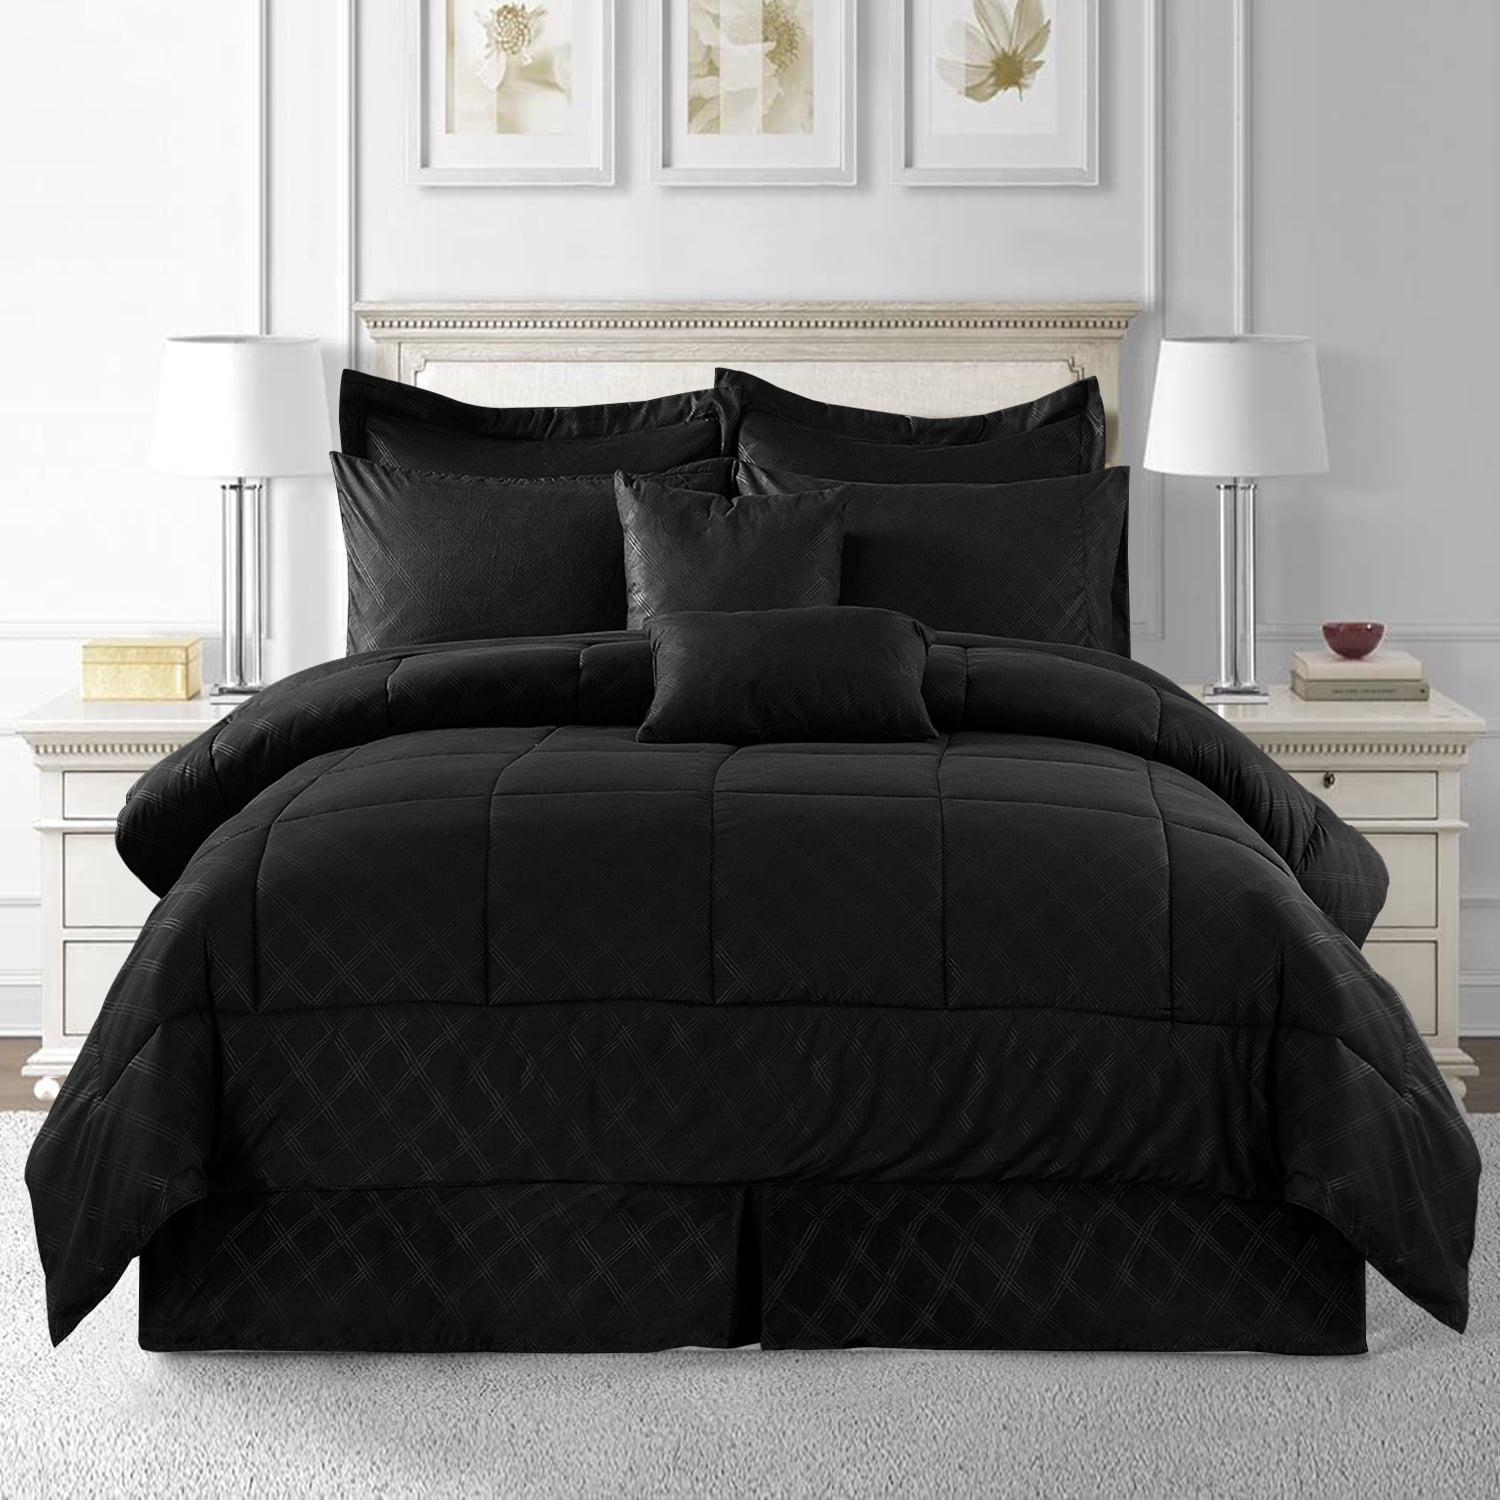 Jml 10-Piece Black Comforter Set, Luruxy Soft Bed in A Bag Queen Size